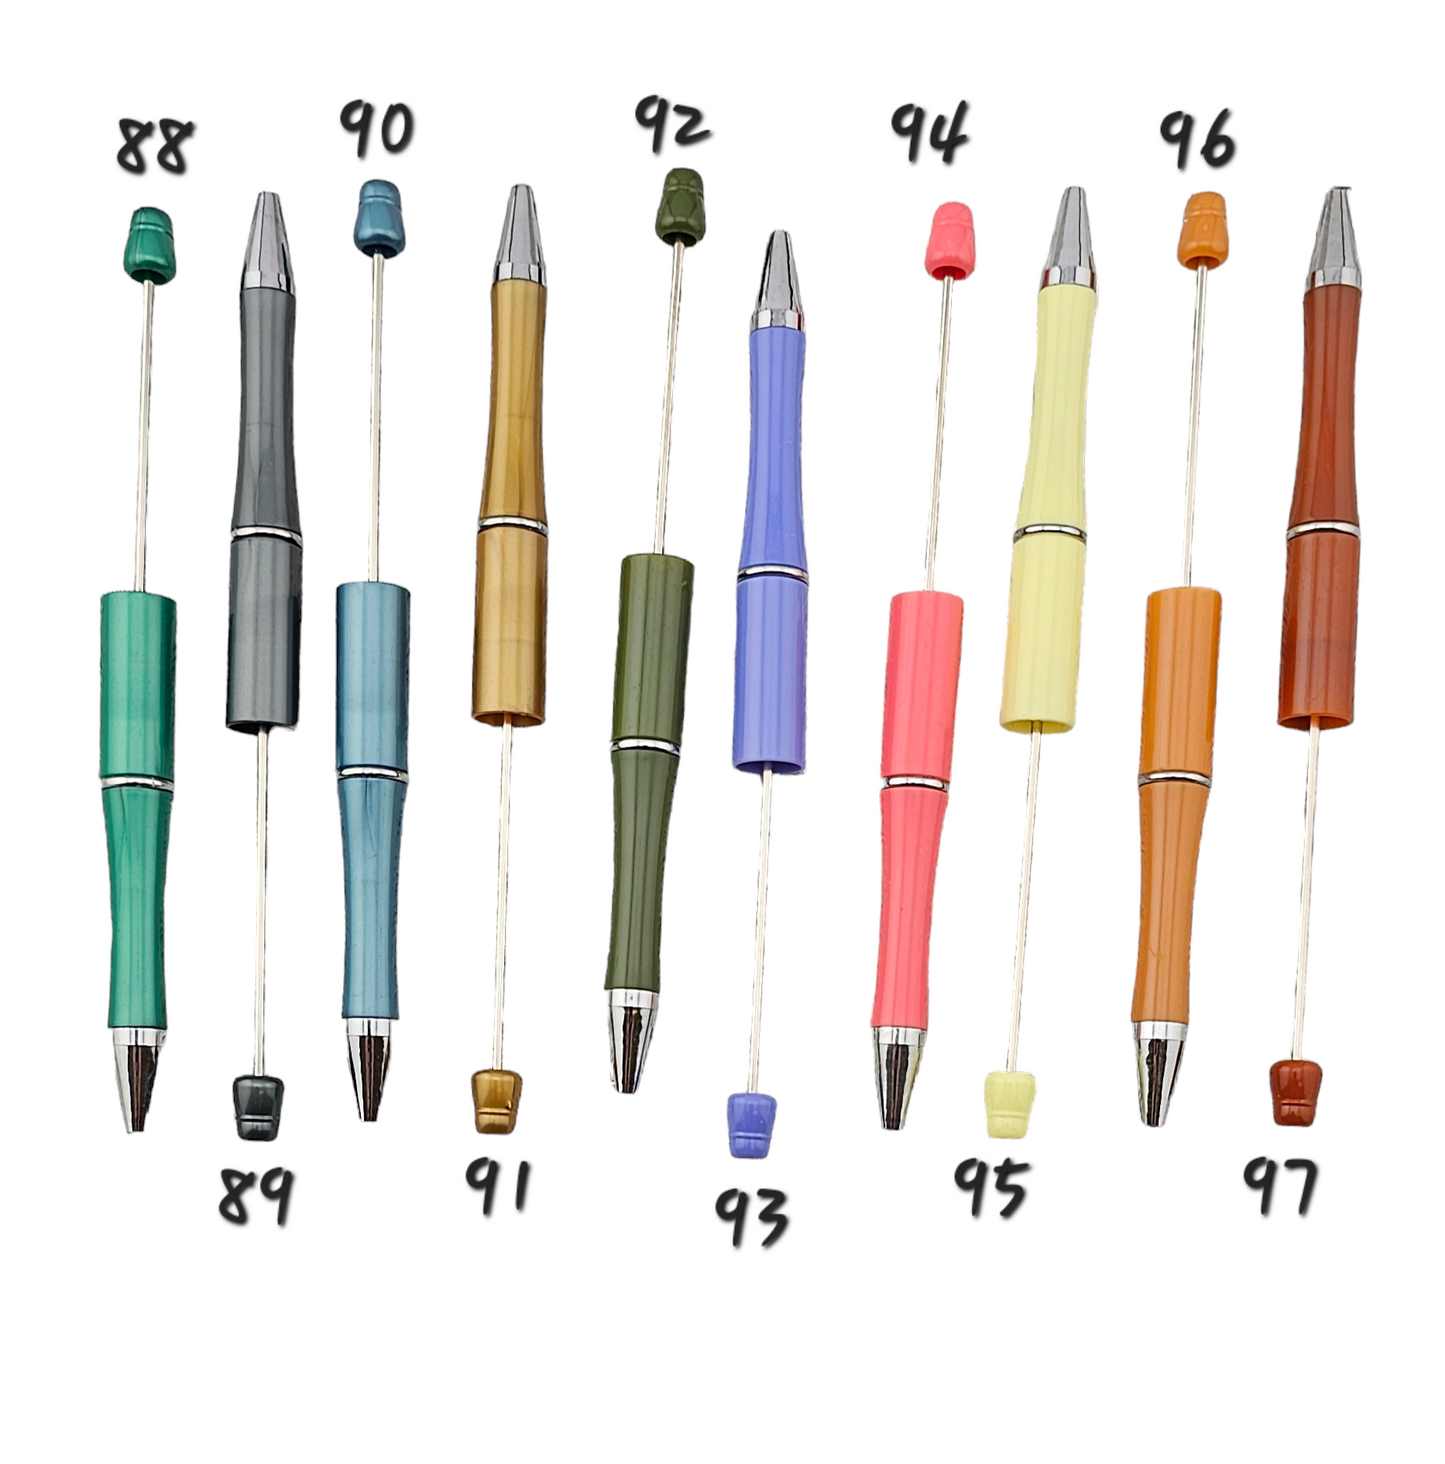 Beadable Pens 88 thur 97